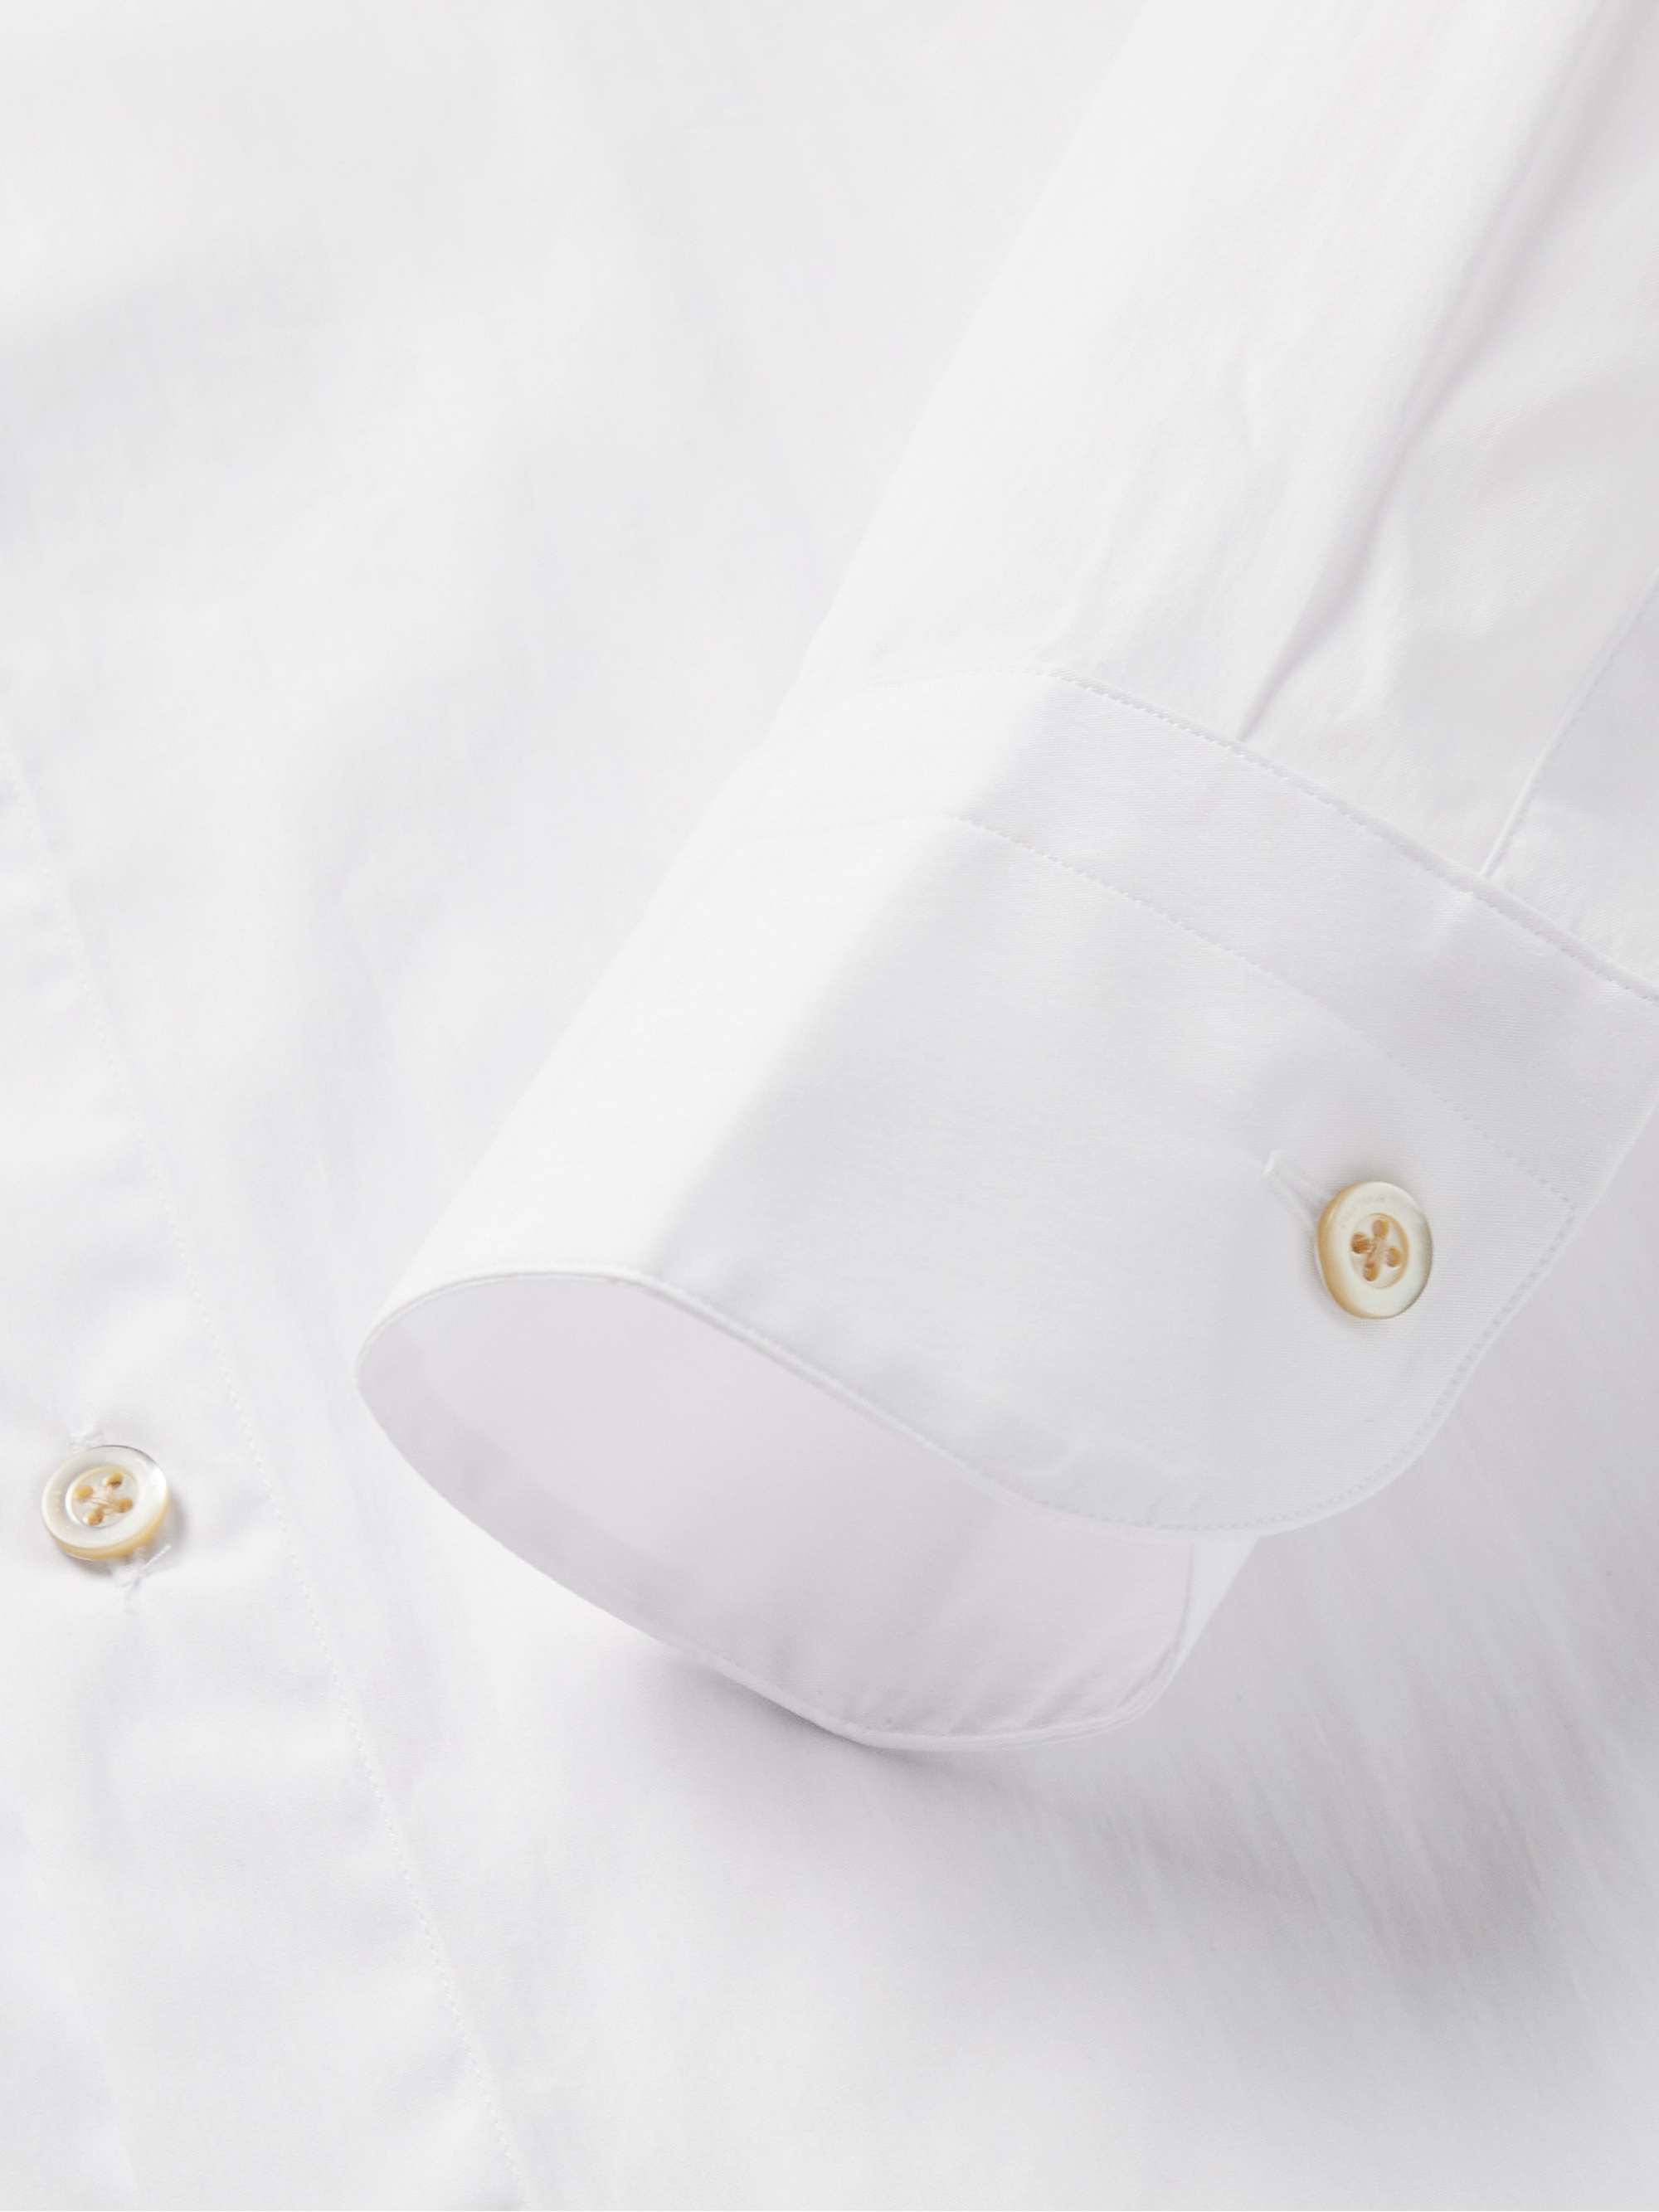 BOGLIOLI Grandad-Collar Cotton-Poplin Shirt